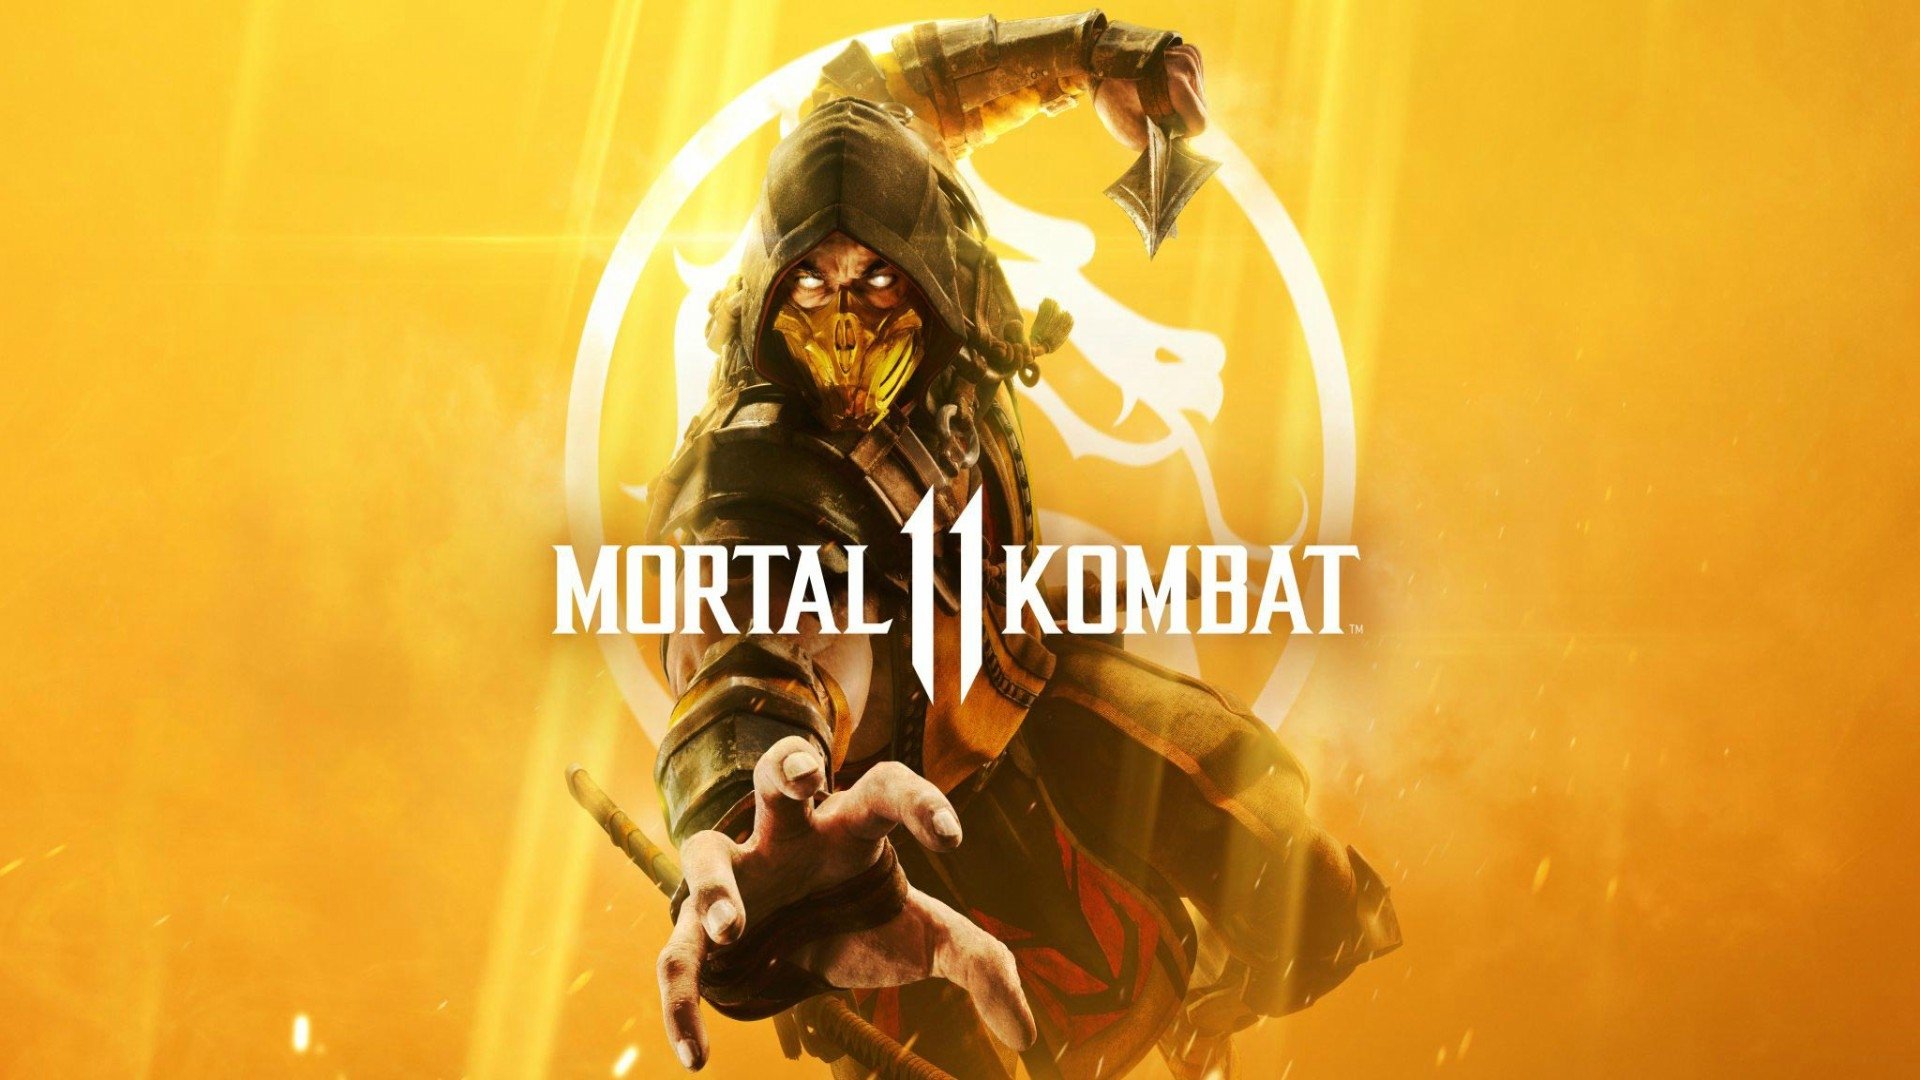 Mortal Kombat HD Wallpaper Background Image